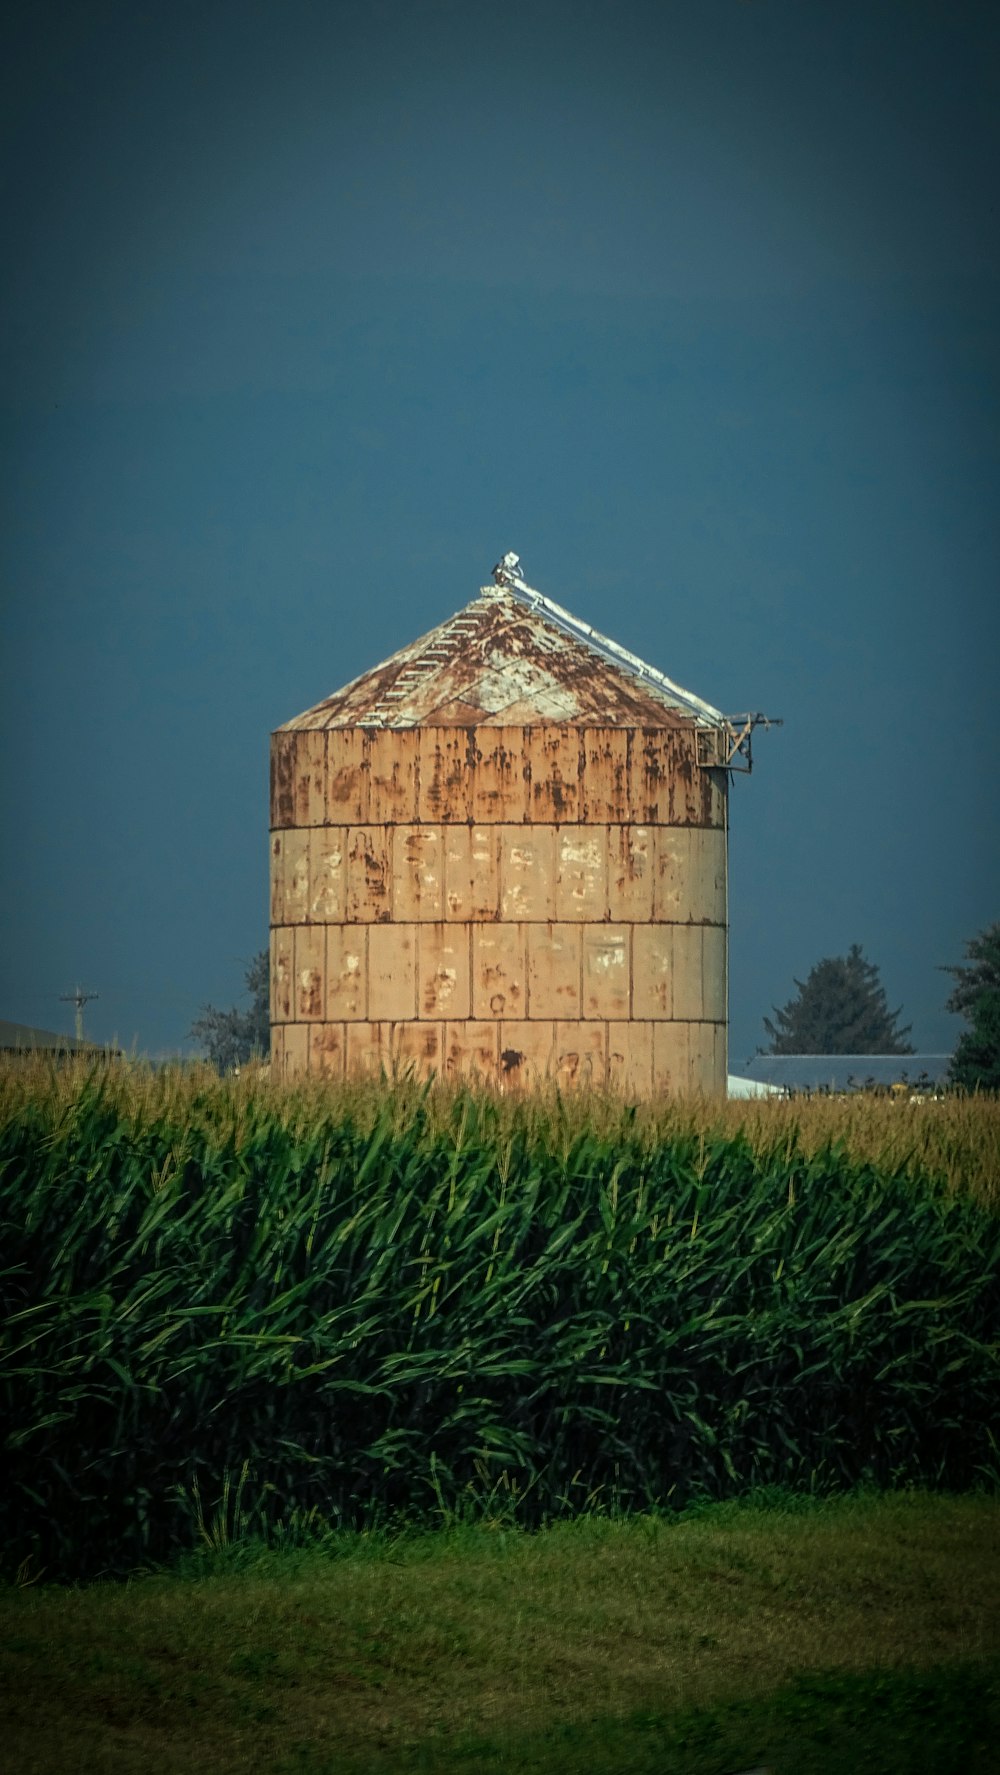 a grain silo in a field of tall grass